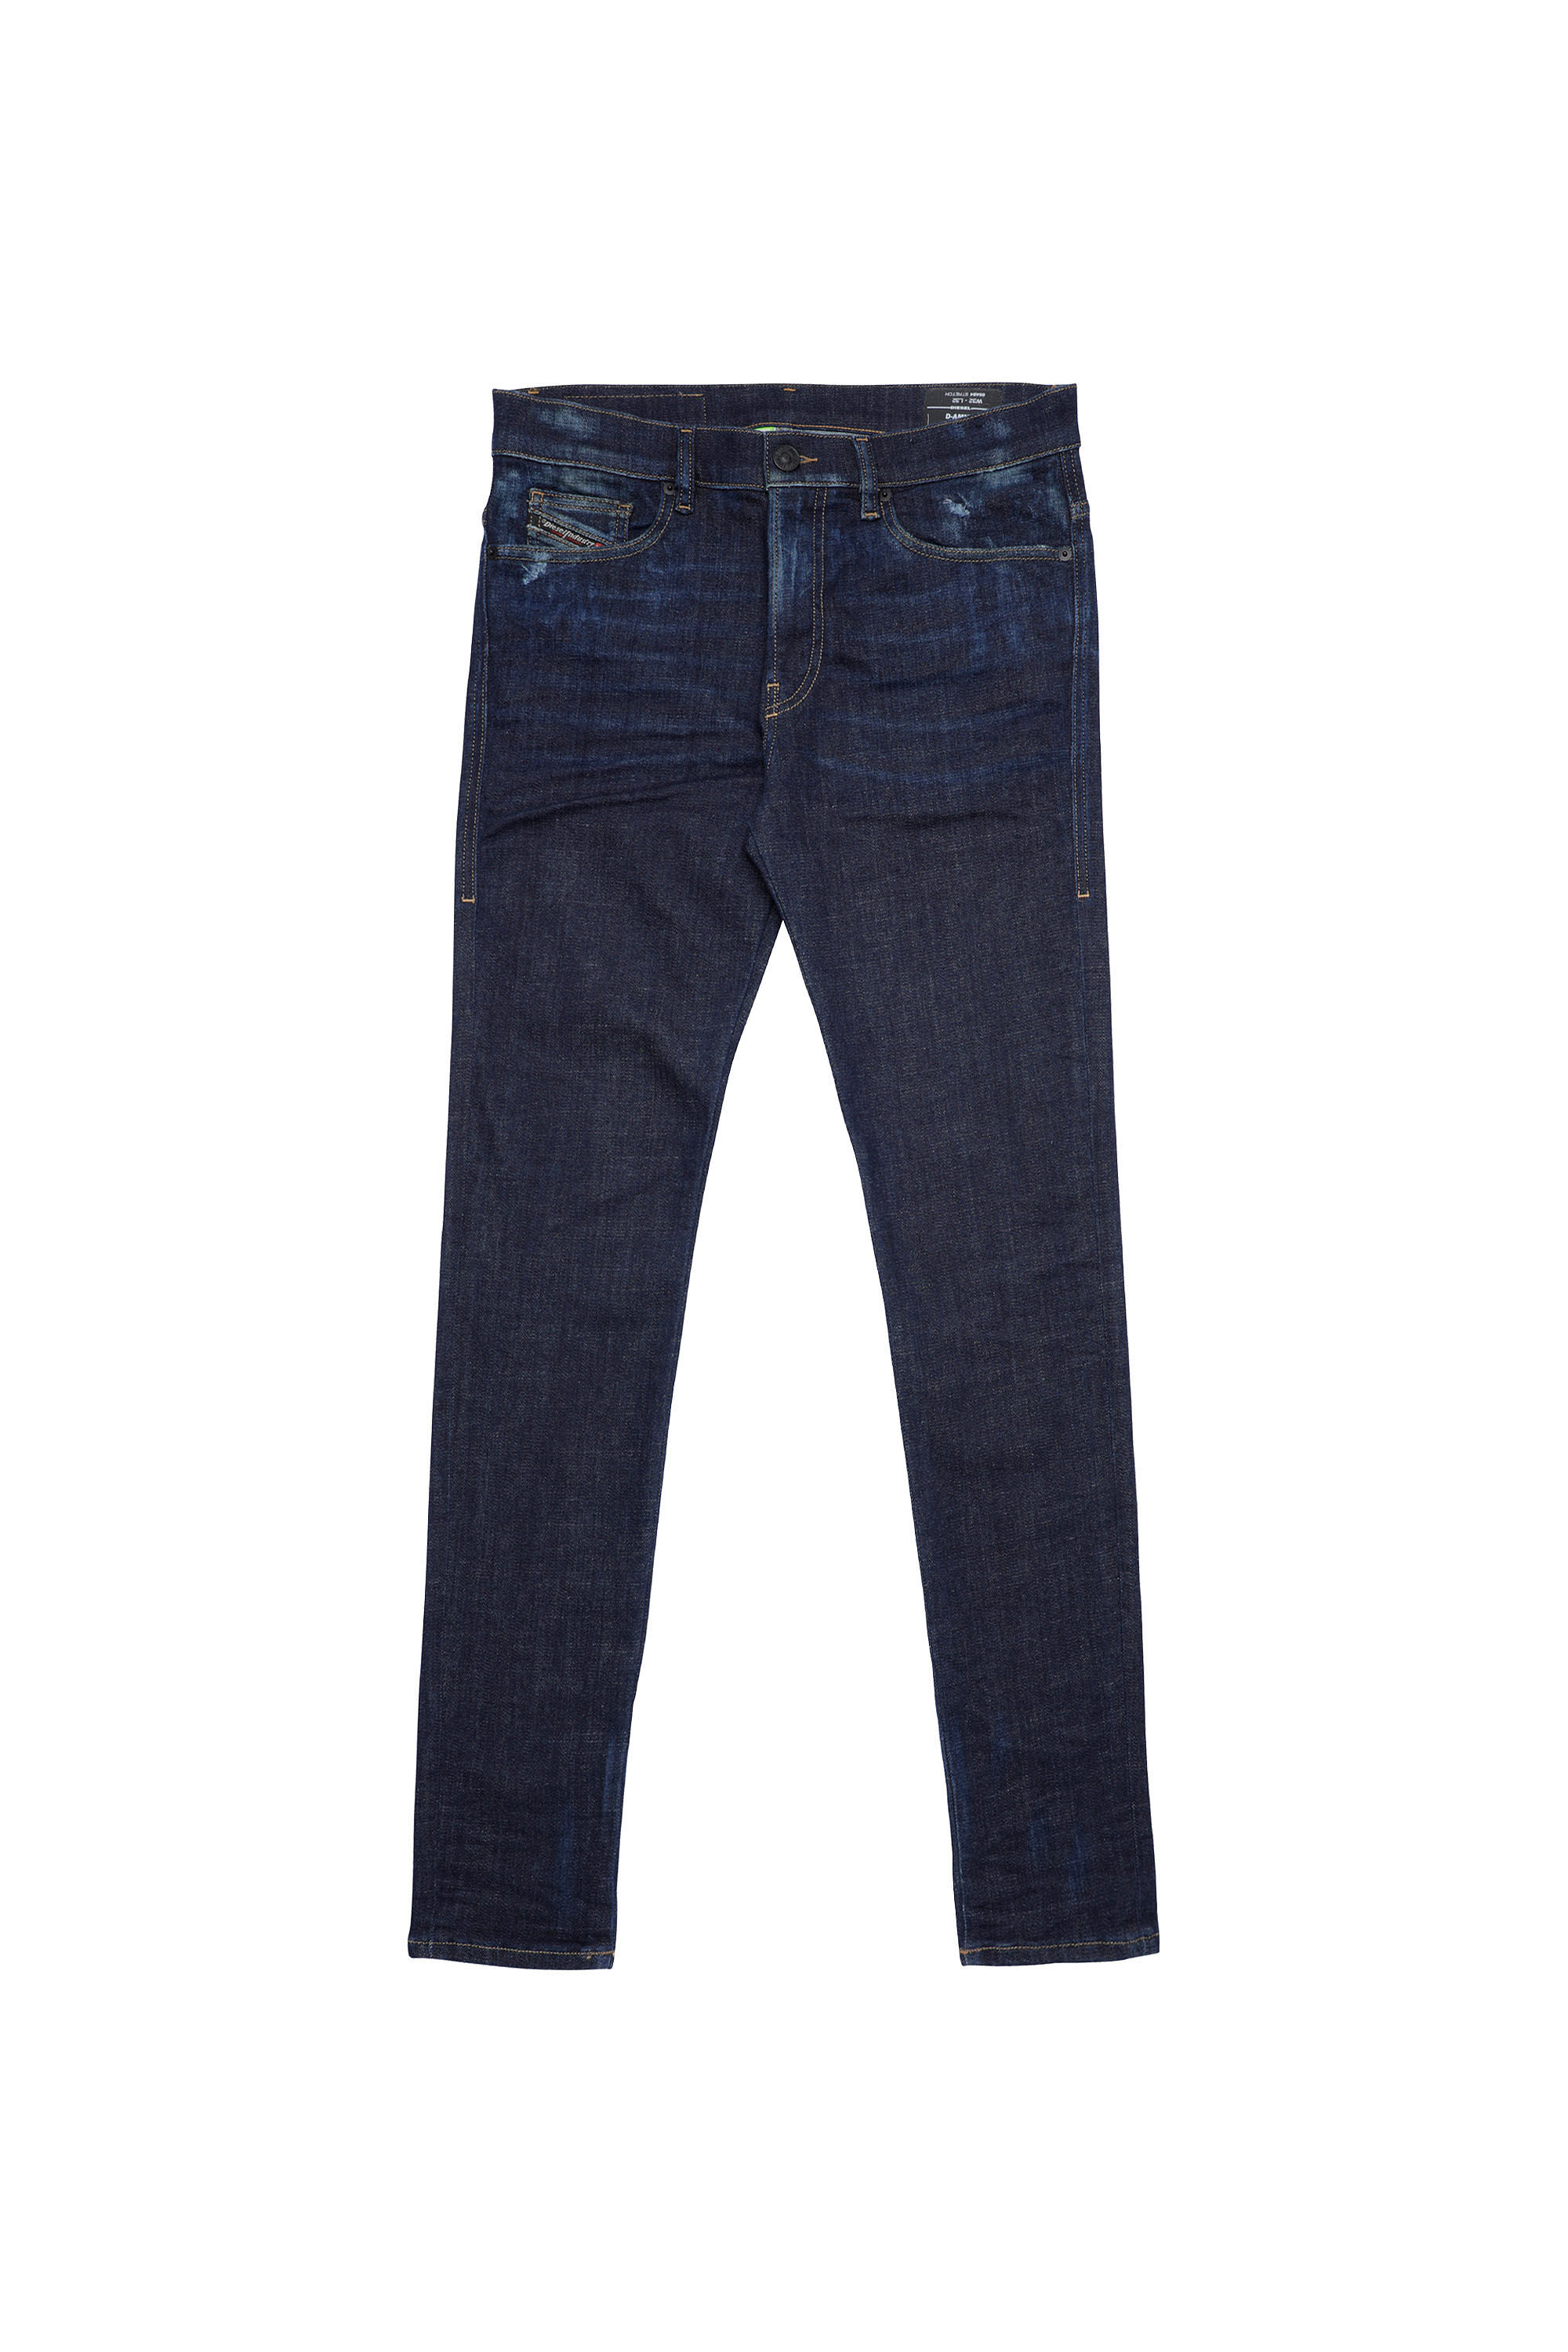 Diesel - D-Amny 09A84 Skinny Jeans,  - Image 2